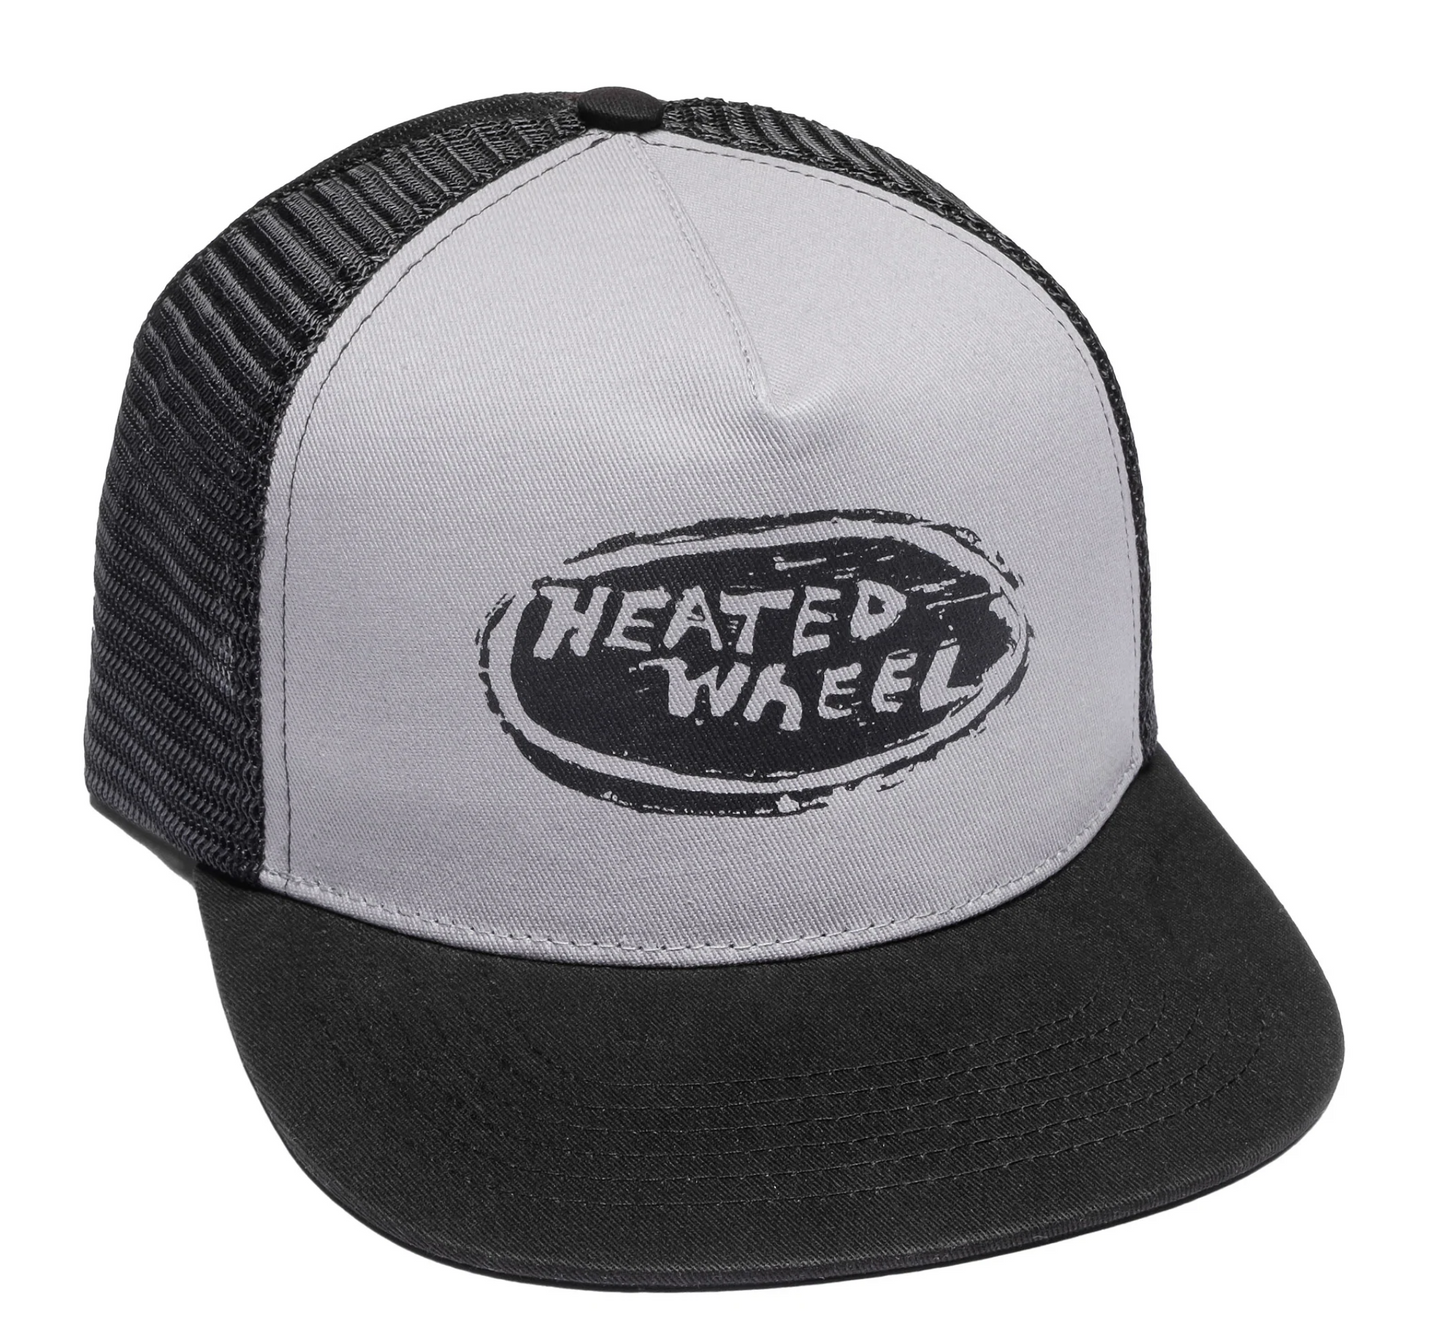 OVAL SNAPBACK HAT -THE HEATED WHEEL